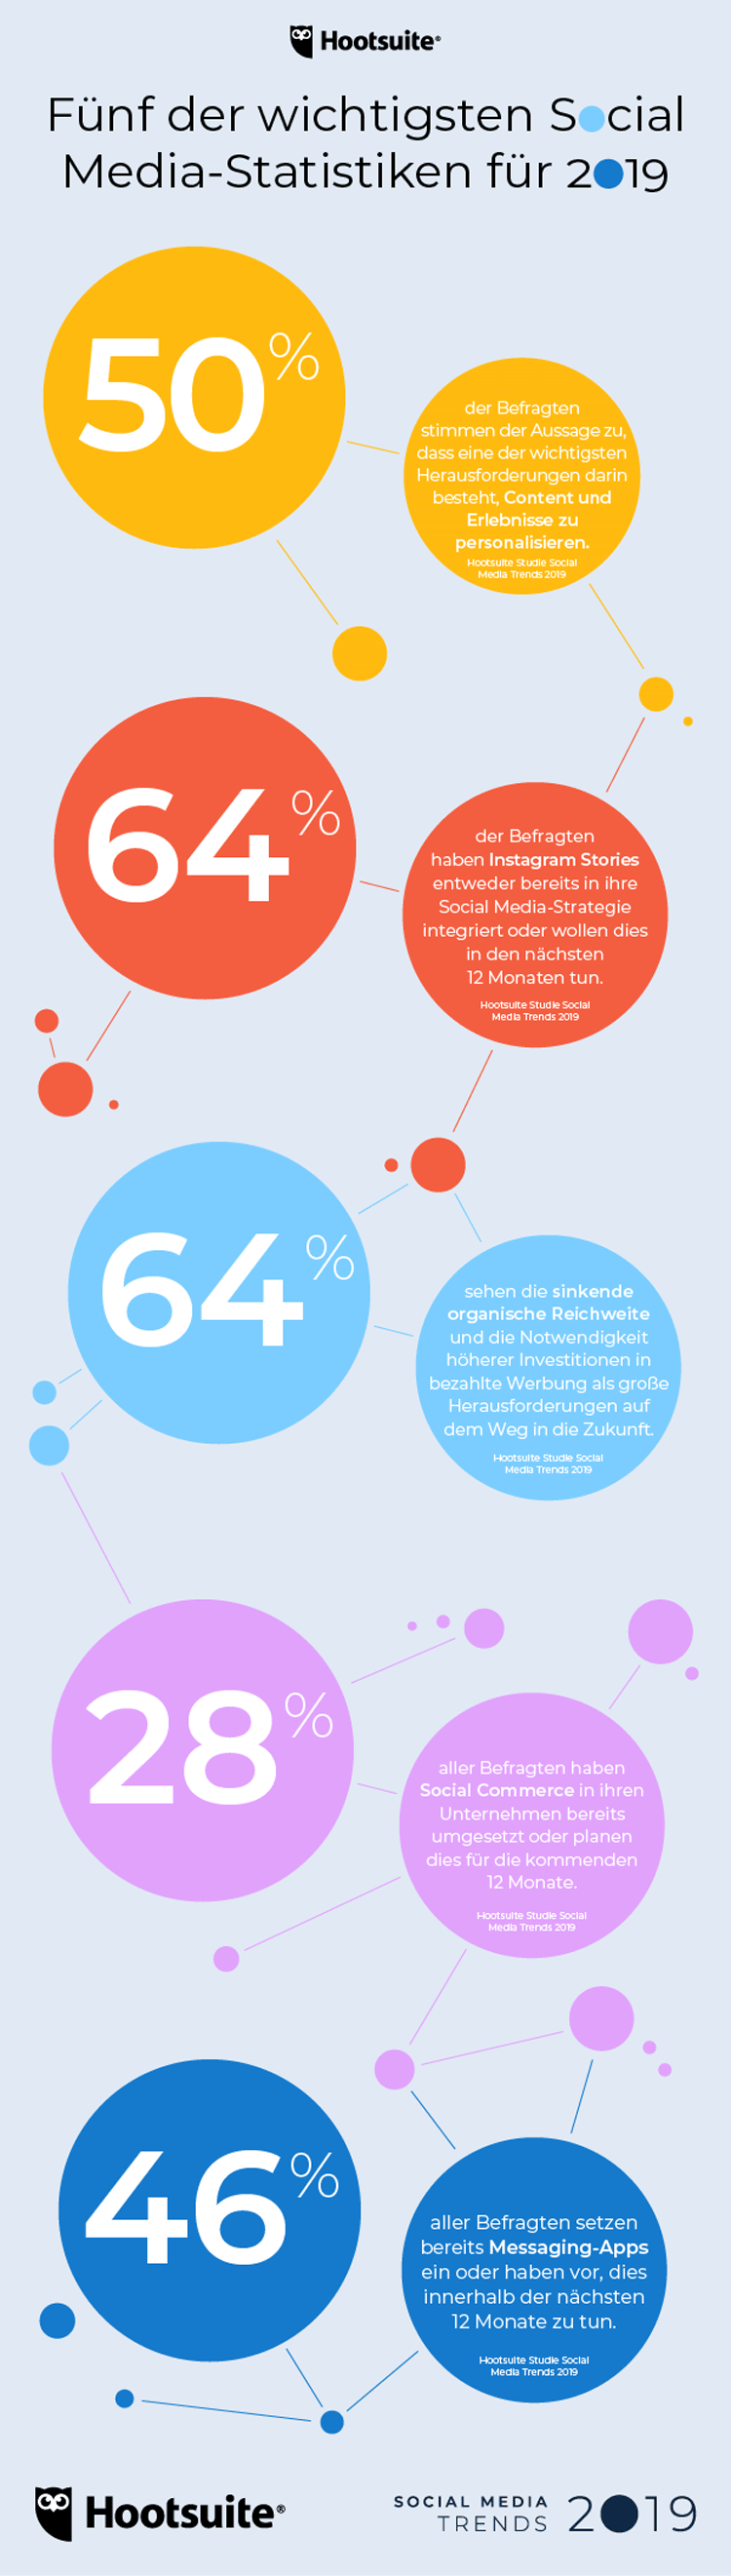 Infografik: Fünf wichtige Social-Media-Fakten für 2019